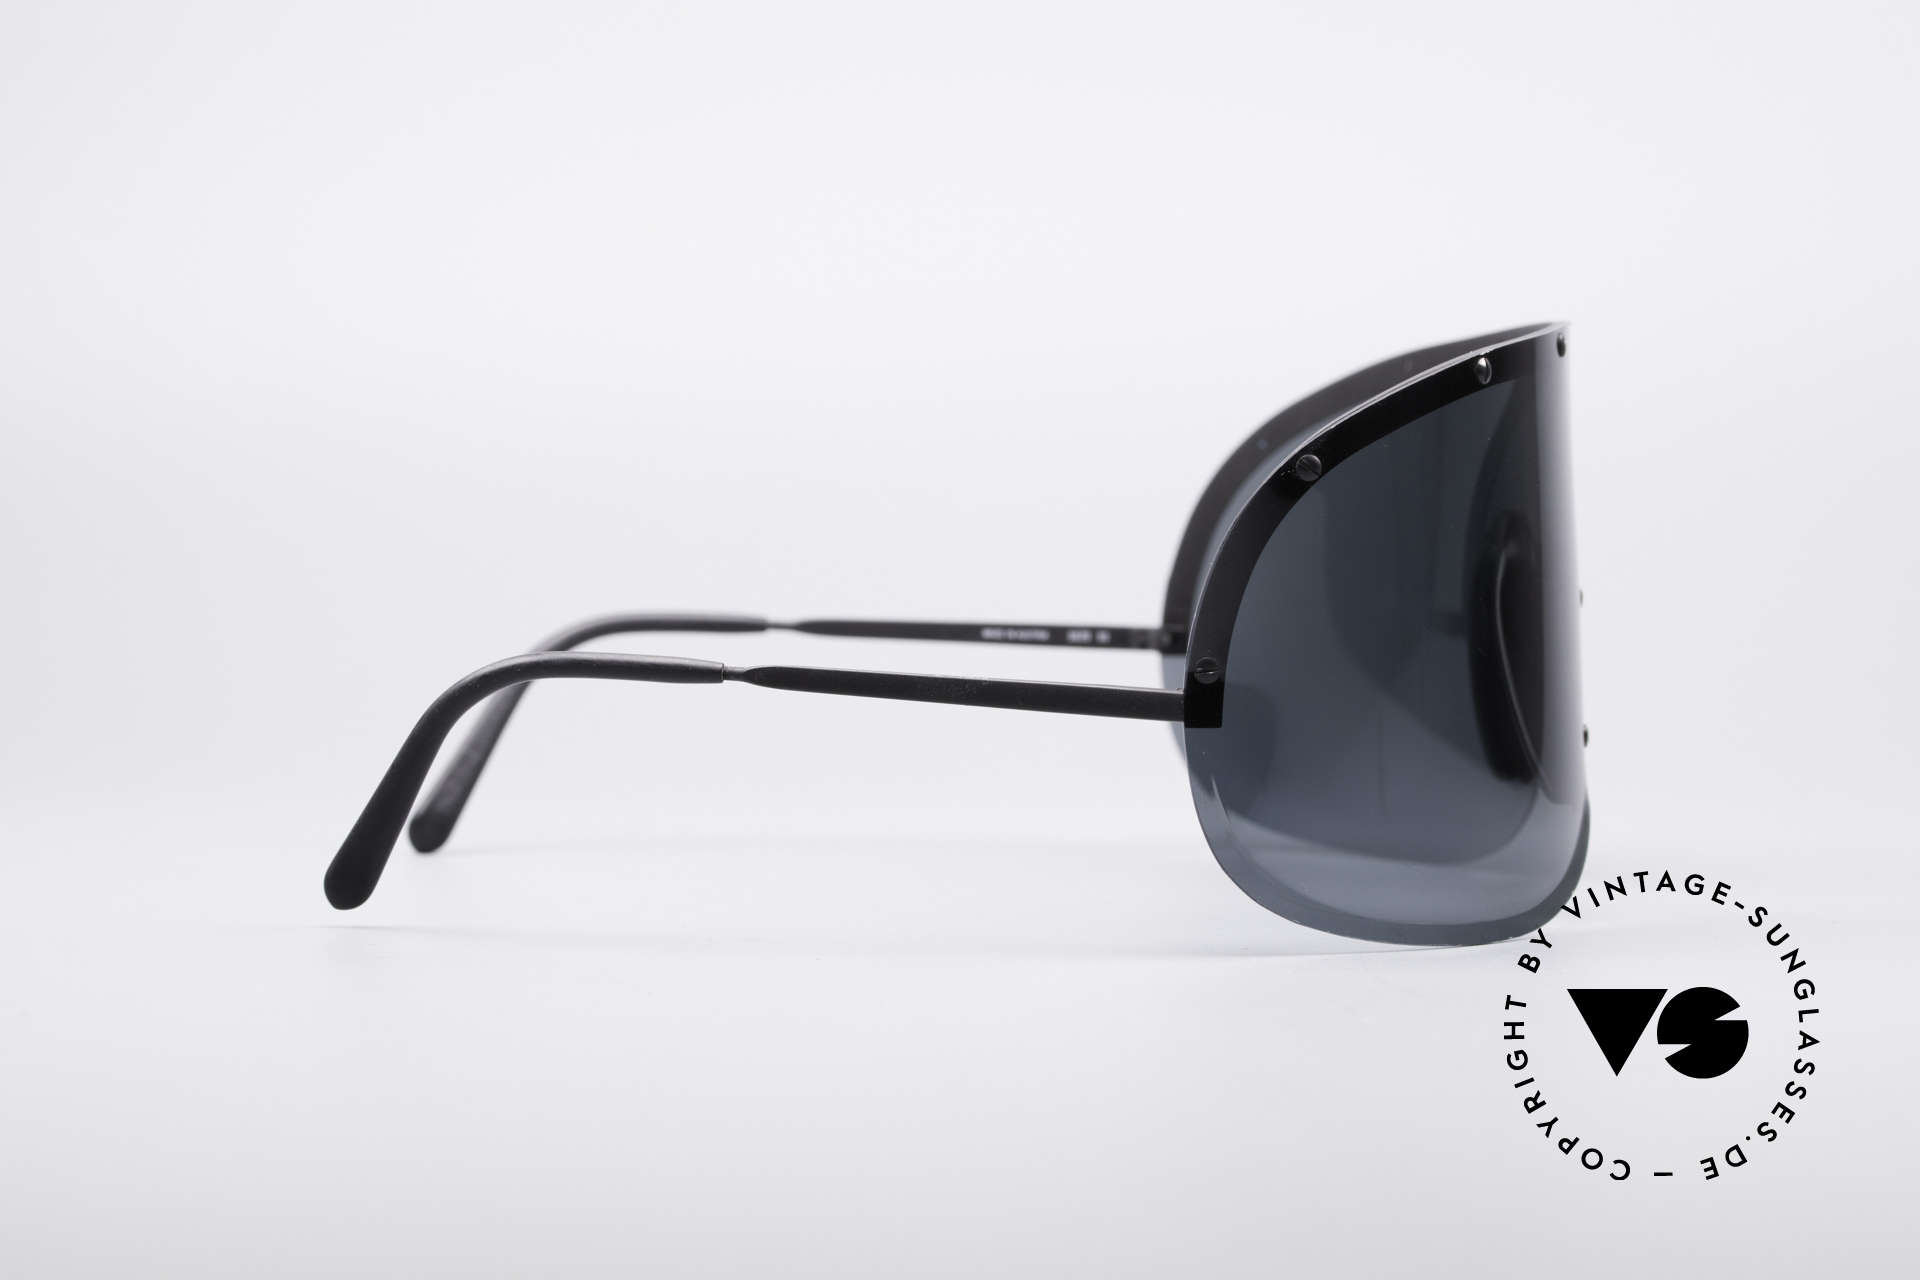 Porsche 5620 80's Yoko Ono Shades Black, thus, worldwide well-known as original 'Yoko Ono shades', Made for Men and Women